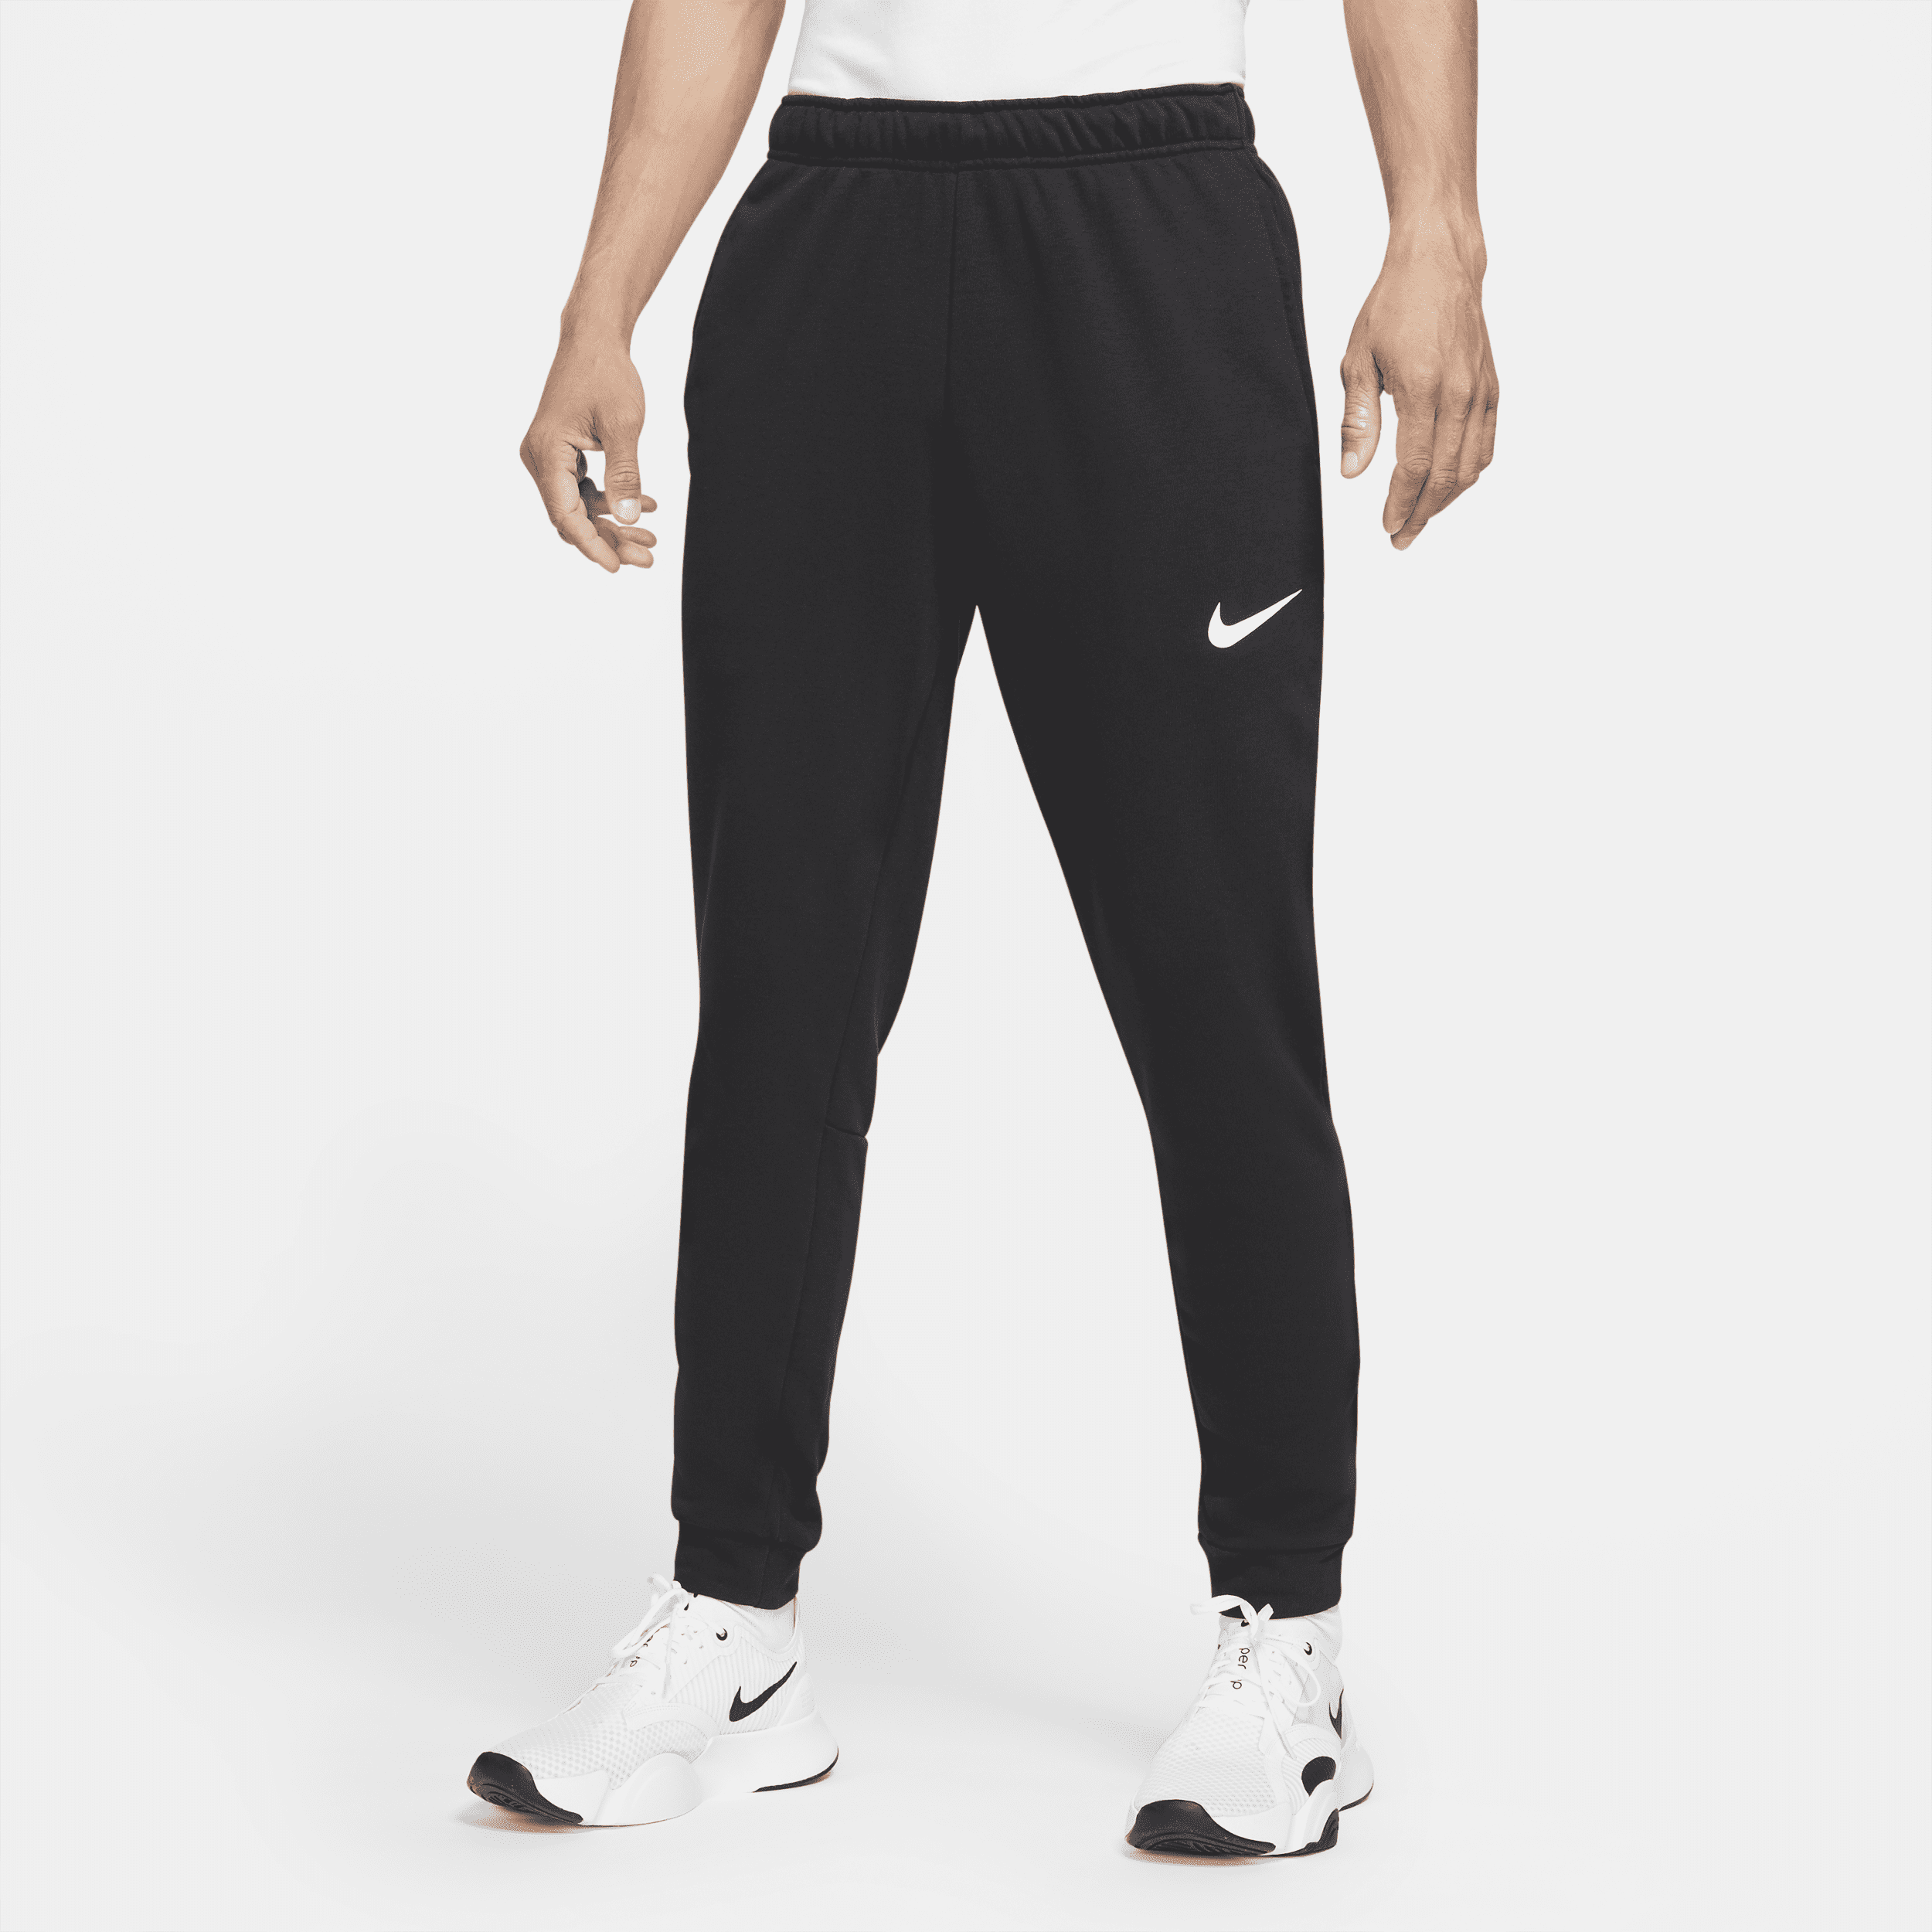 Nike Dry Dri-FIT-fitnessbukser i fleece til mænd - sort